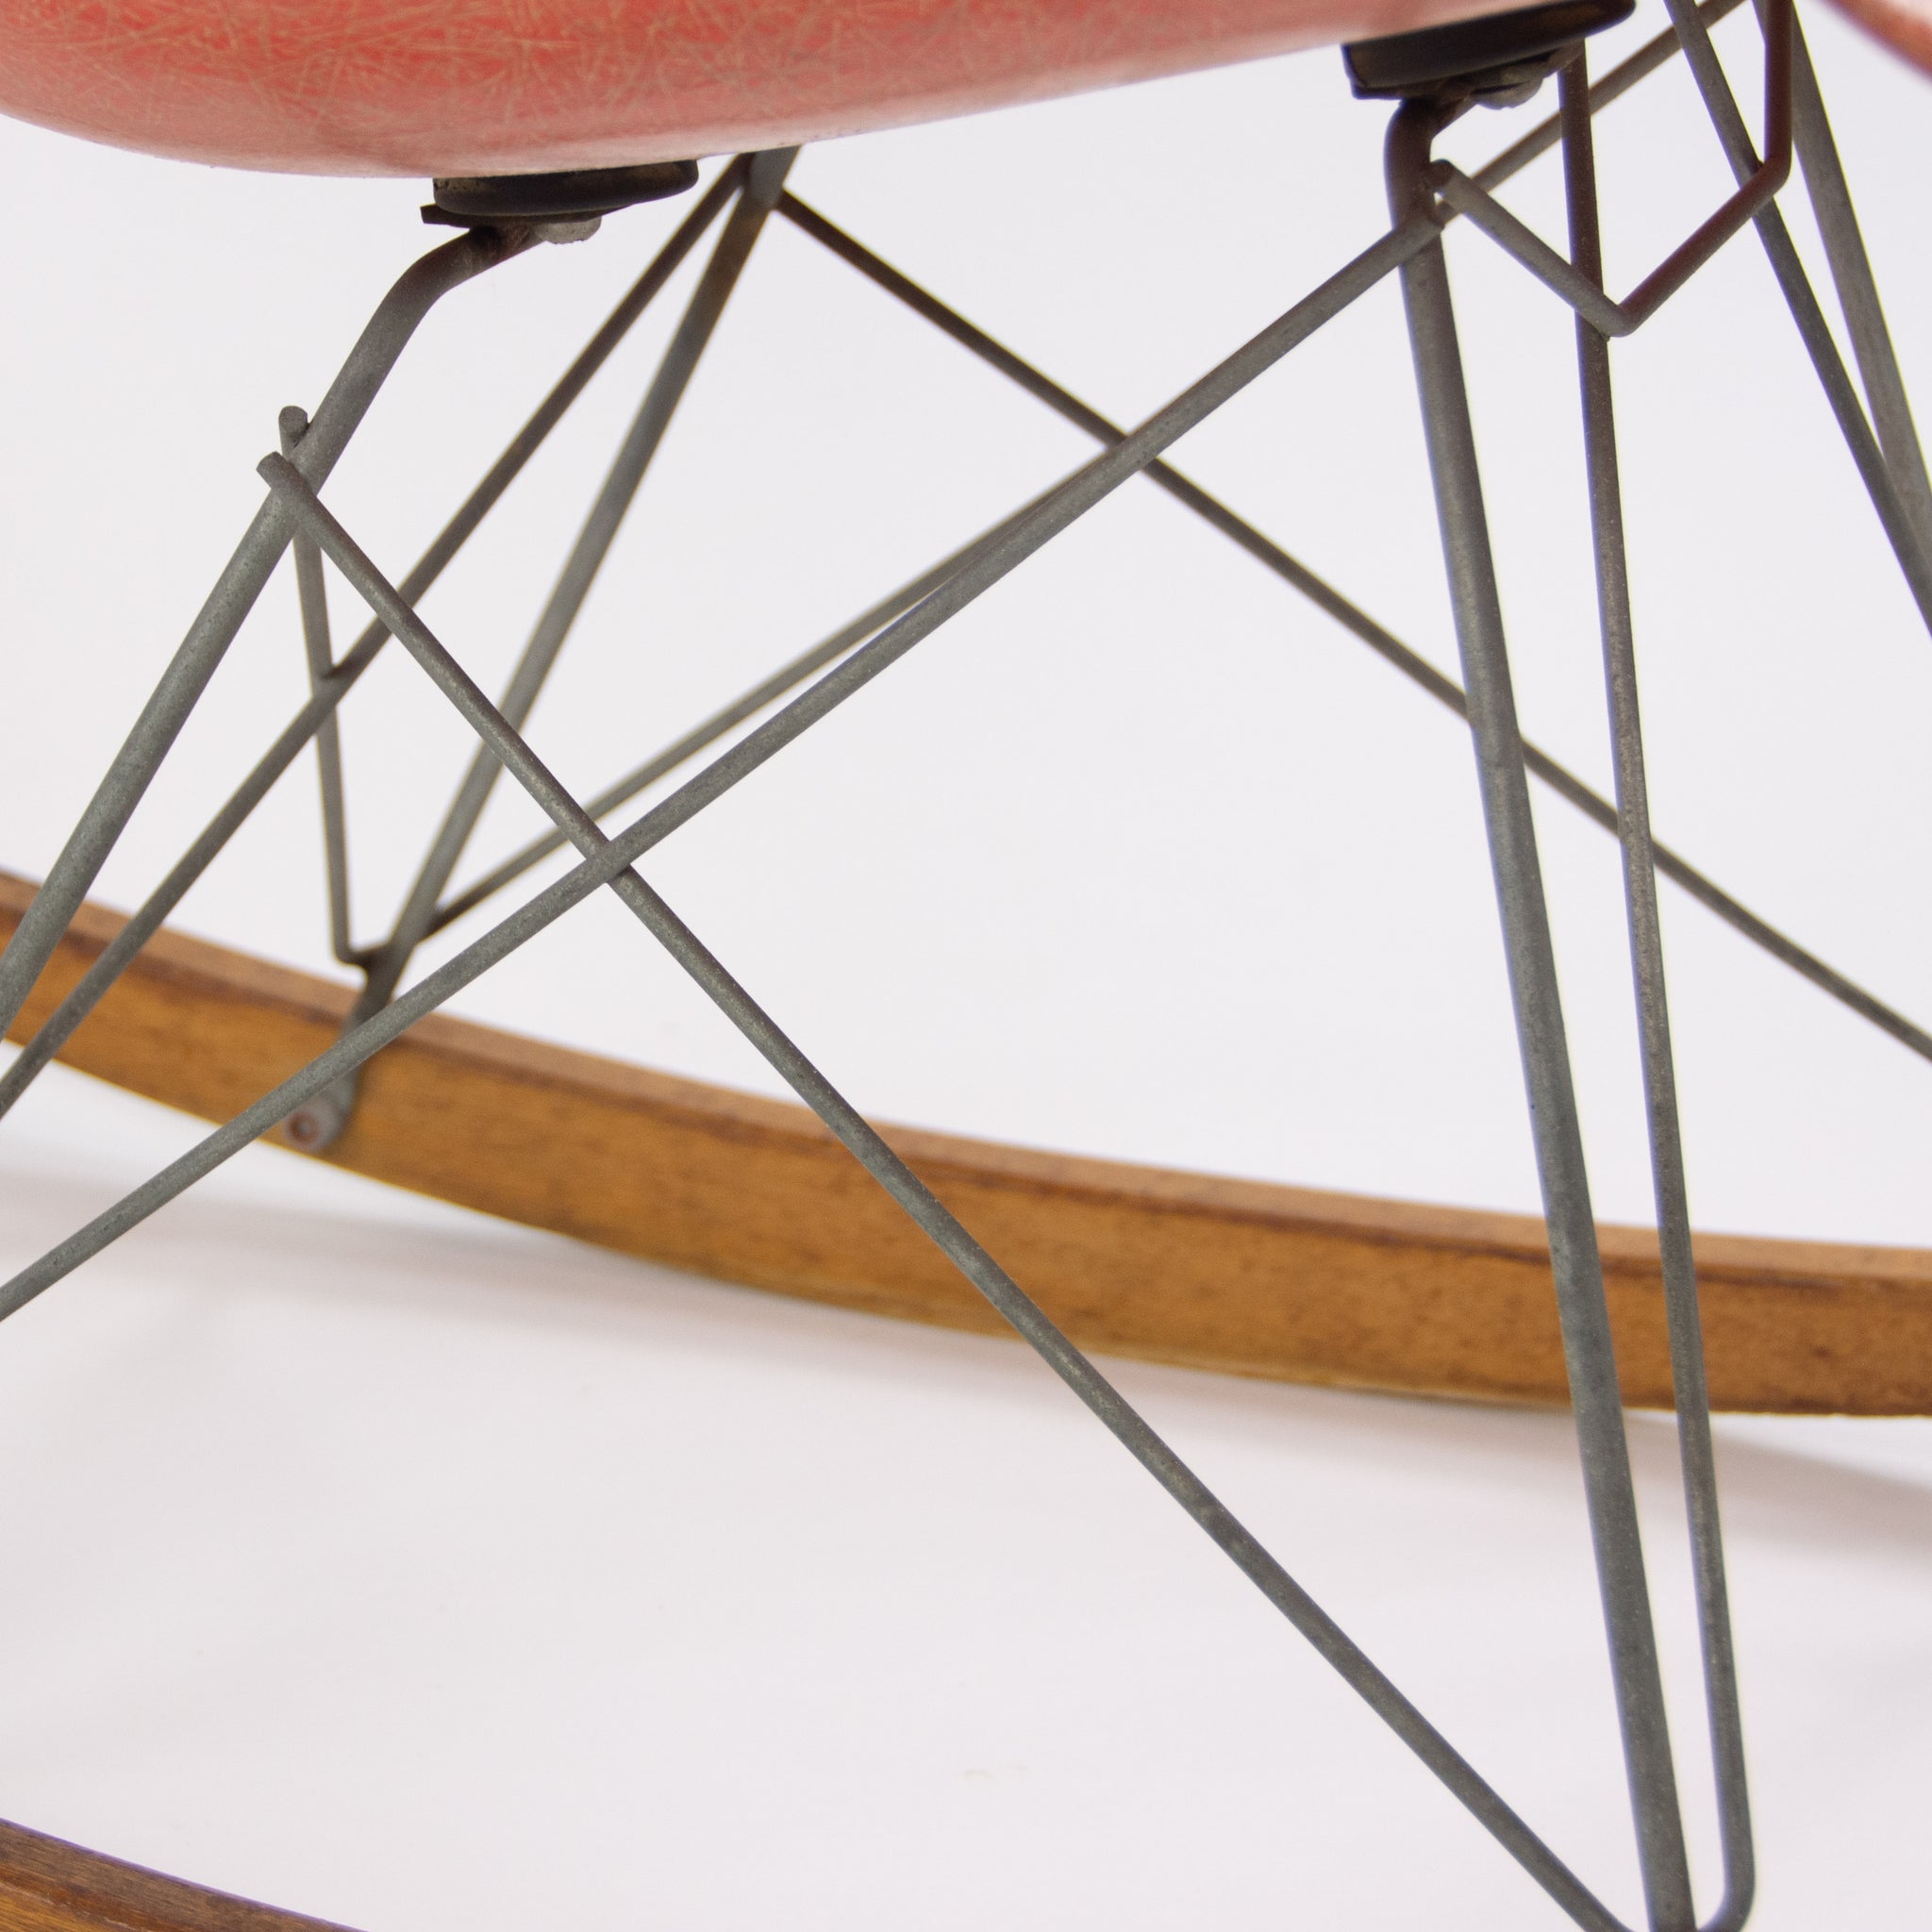 SOLD 1950's Eames Herman Miller RAR Armshell Fiberglass Red Orange Rocking Chair